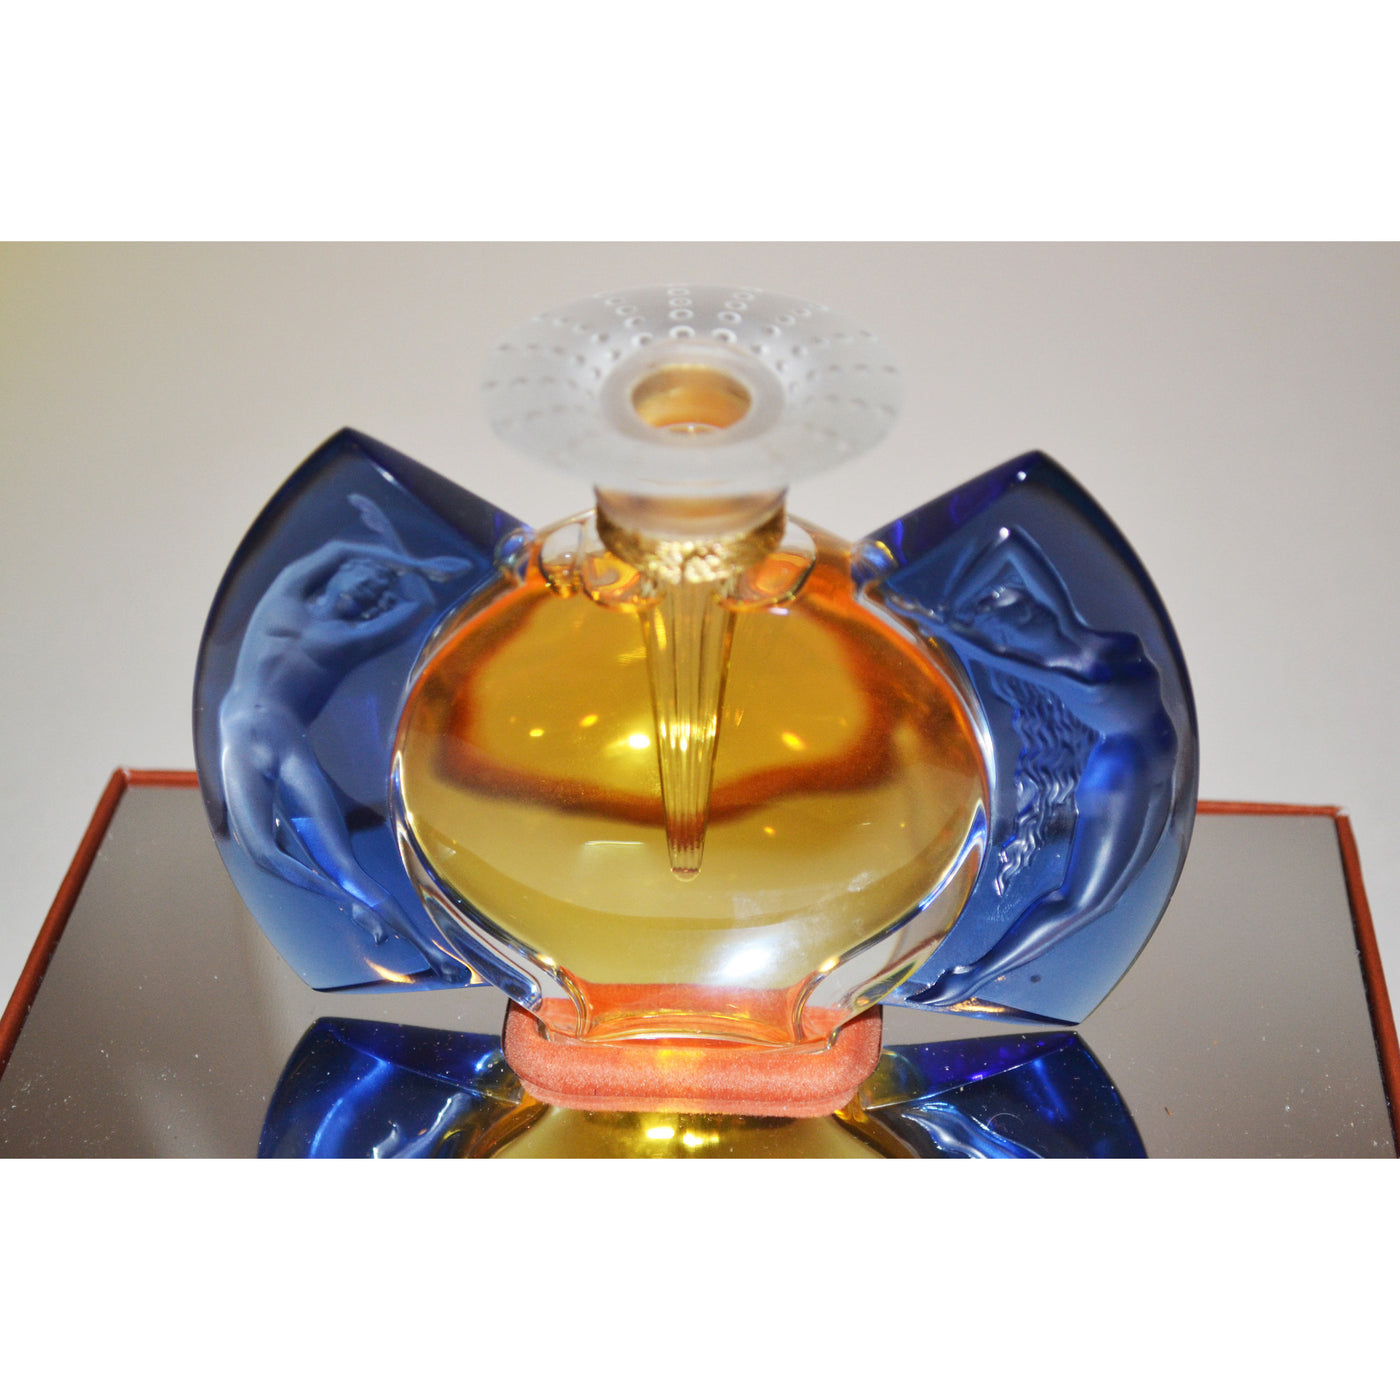 Jour Et Nuit Perfume By Lalique 1999 Limited Flacon Collection